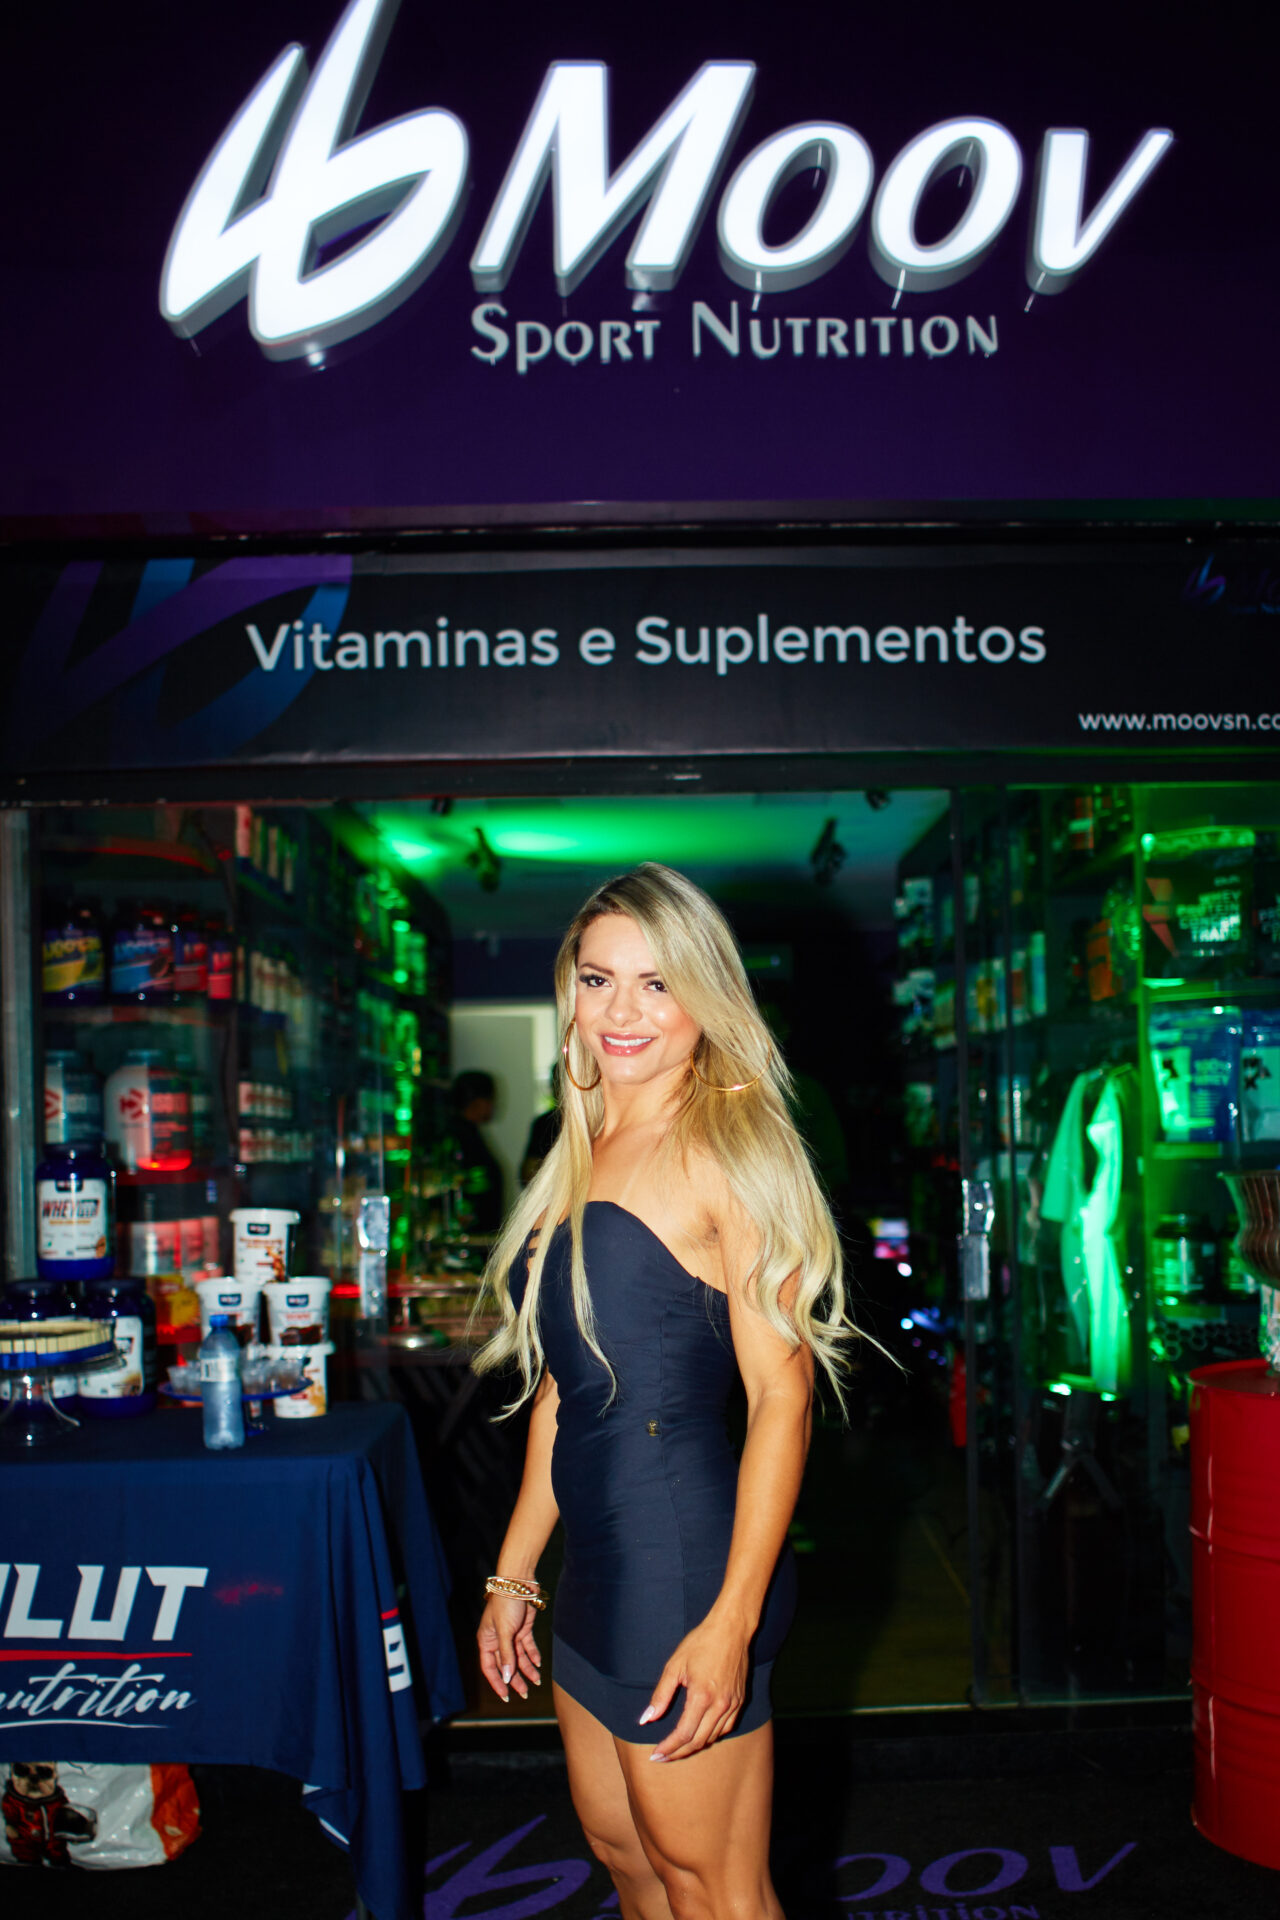 Moov Sport Nutrition, especializada em suplementos, inaugura loja na Asa  Sul - Estilozzo